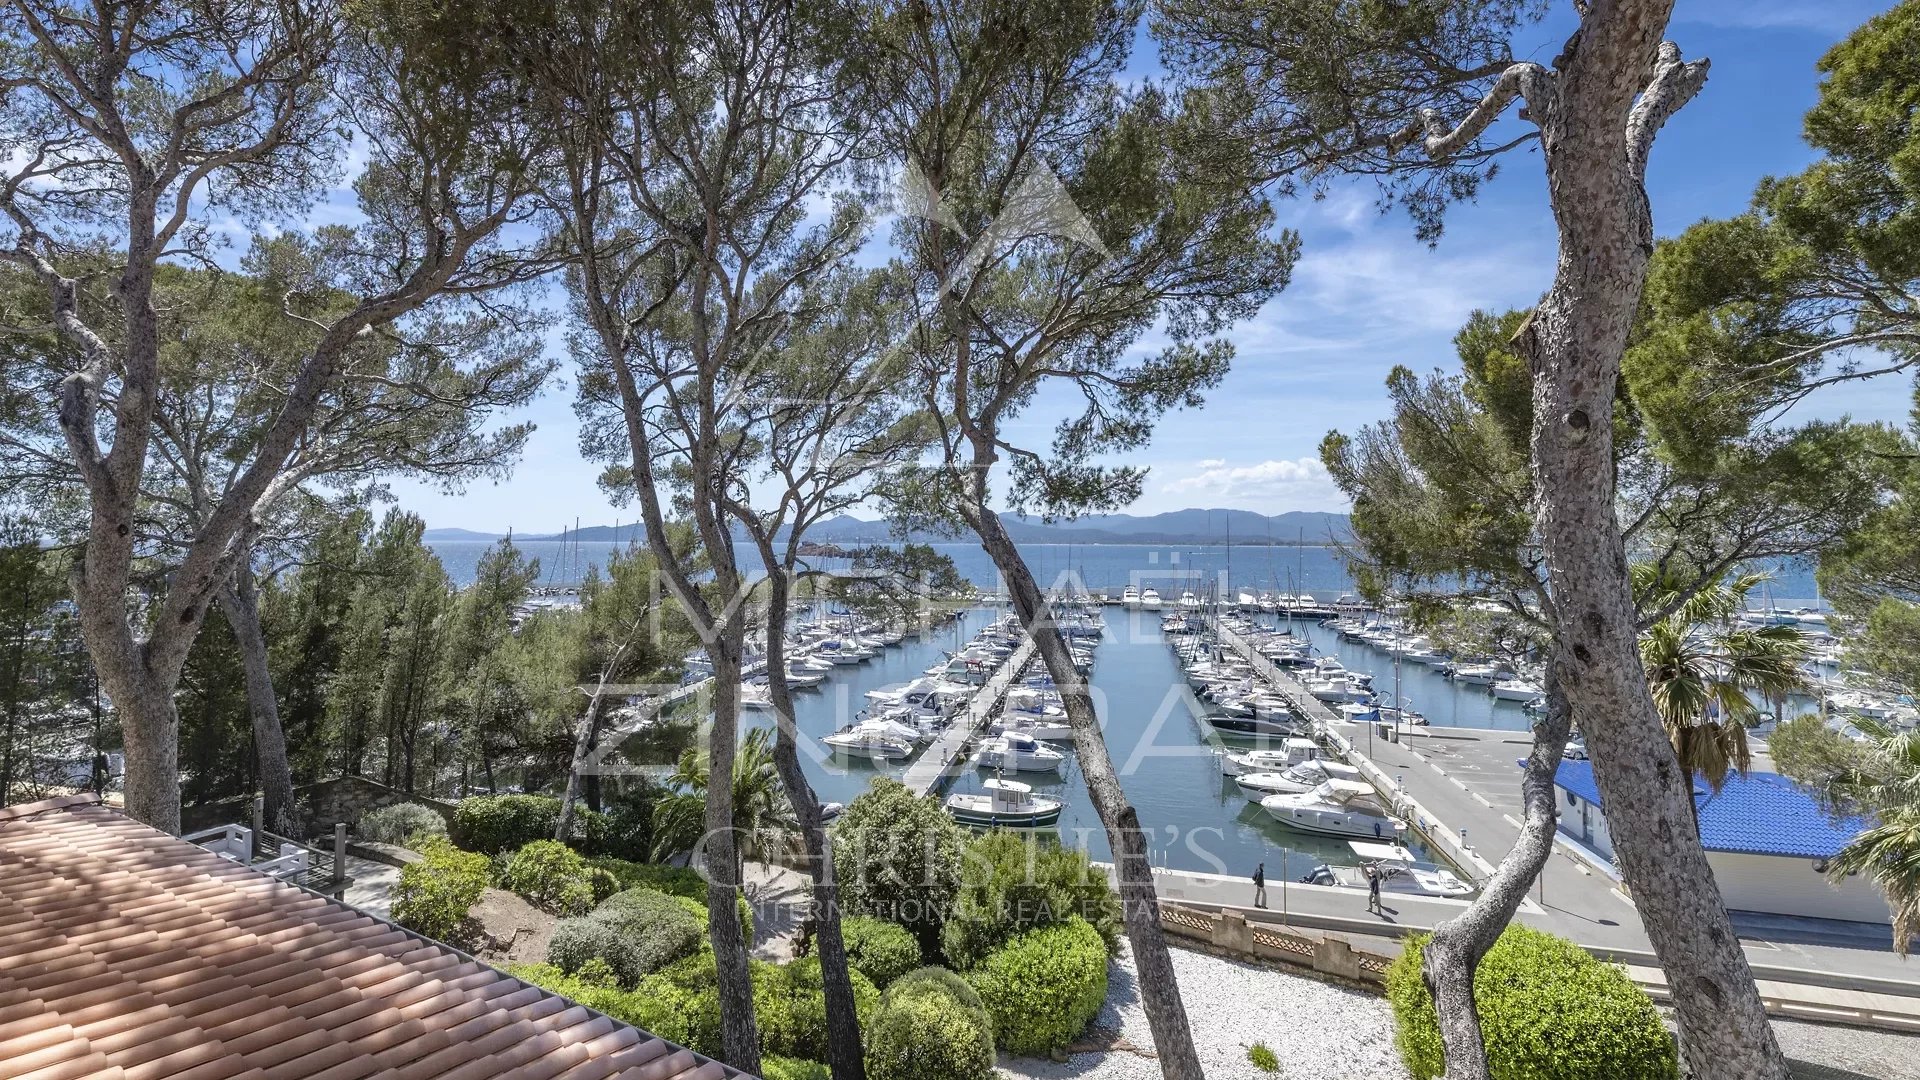 Close to Cannes - Belle Epoque style villa